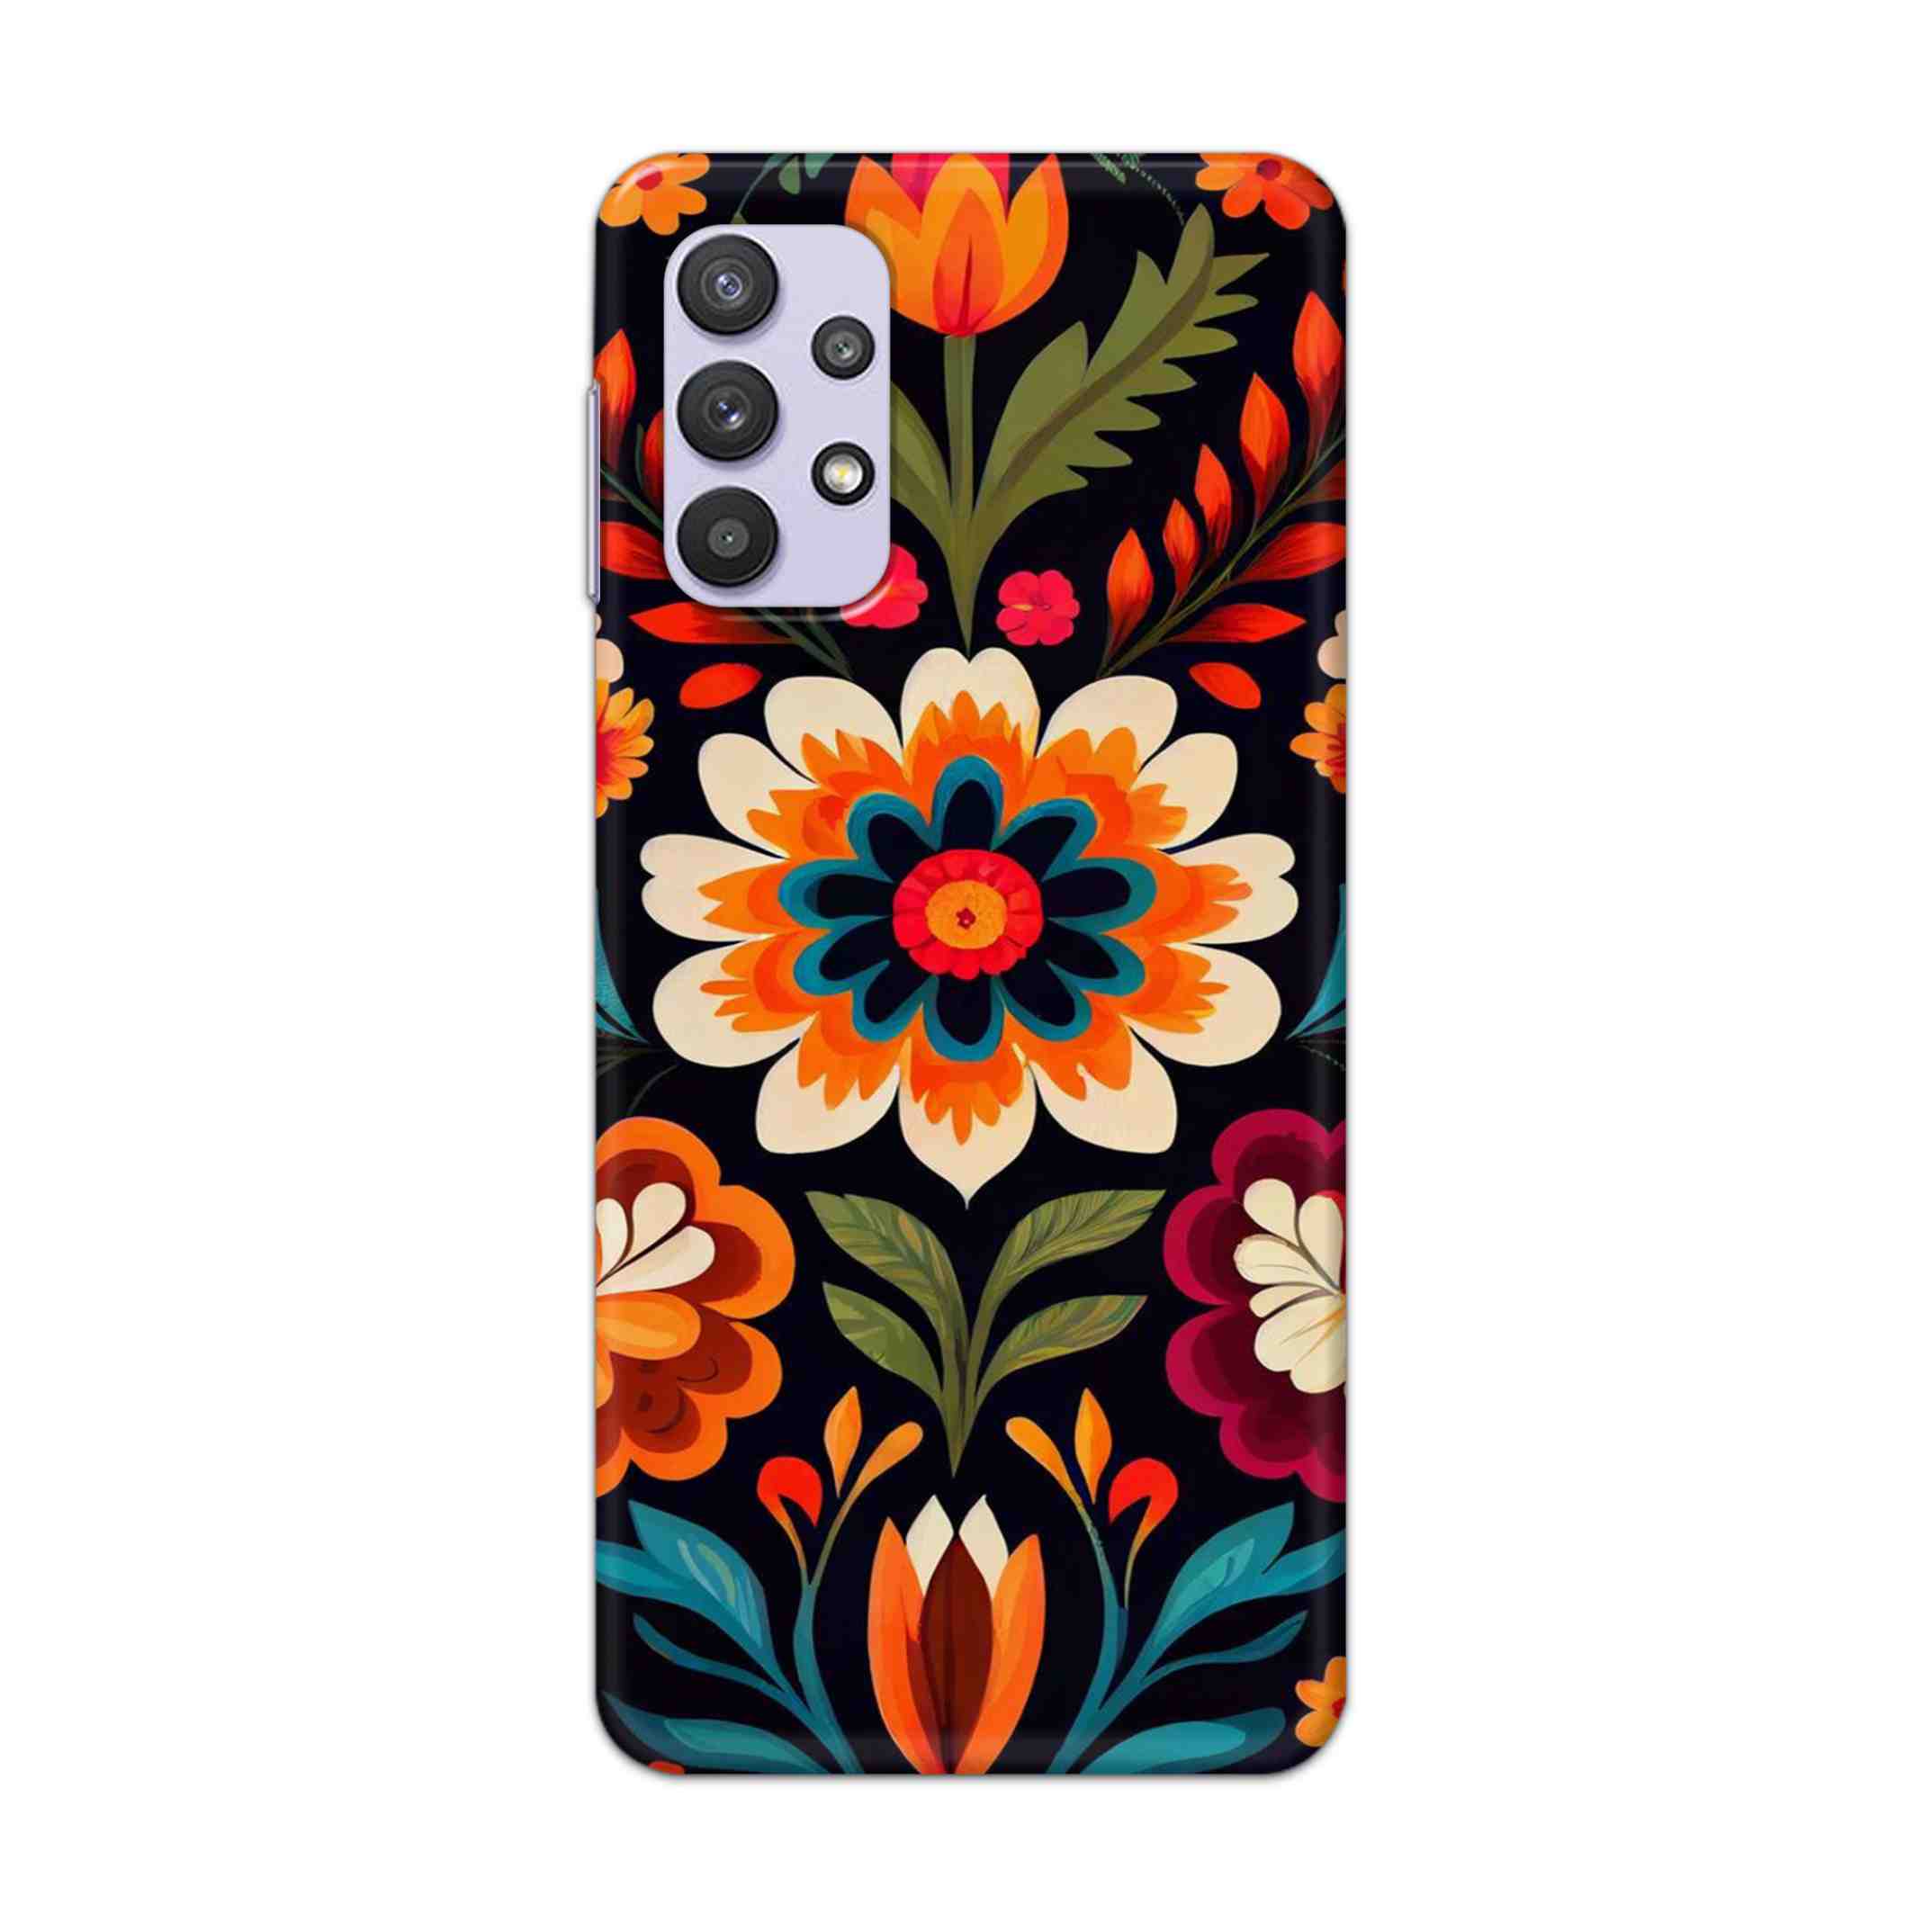 Buy Flower Hard Back Mobile Phone Case Cover For Samsung A32 5G Online